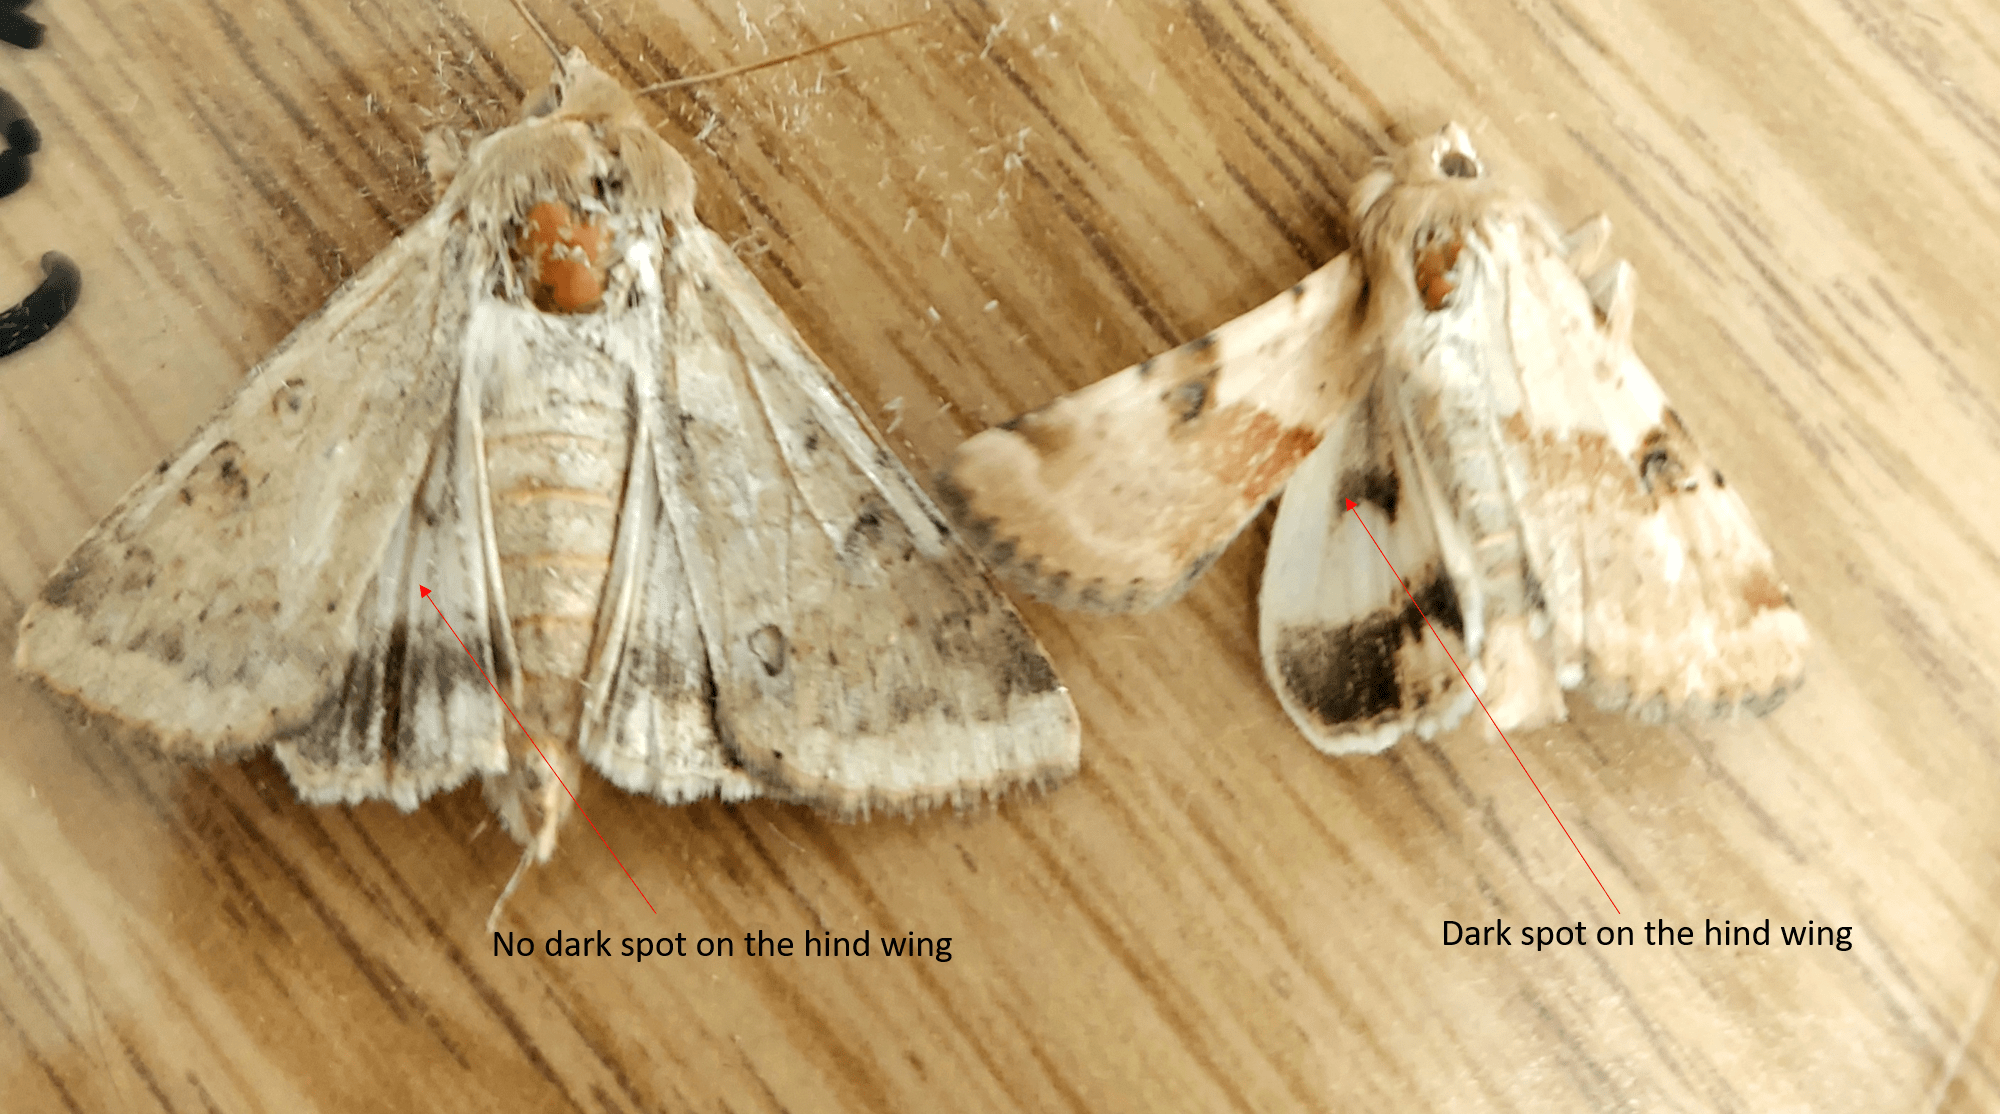 Photo shows a corn earworm moth and a false corn earworm moth side by side. A dark spot on the hind wing differentiates the false corn earworm.